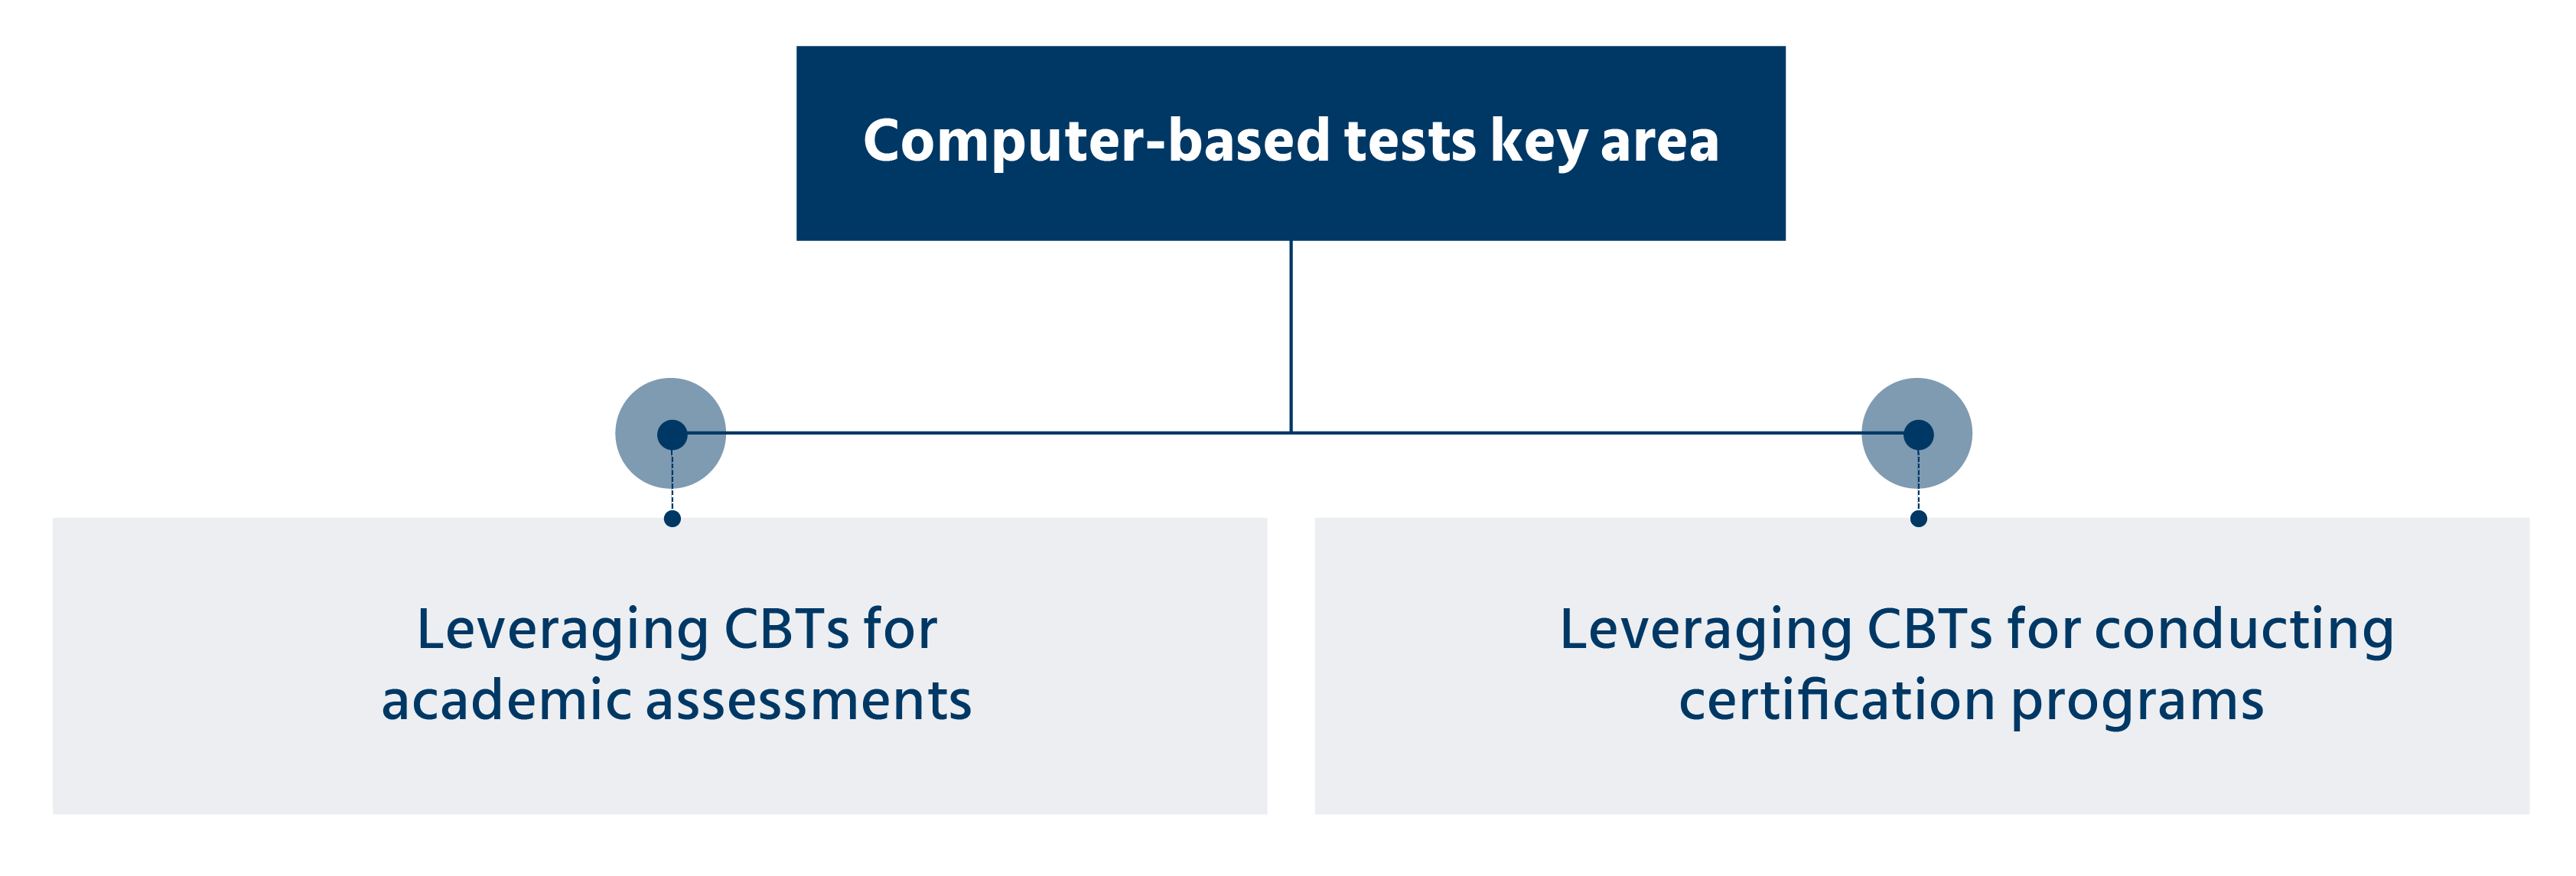 Computer based exam key area